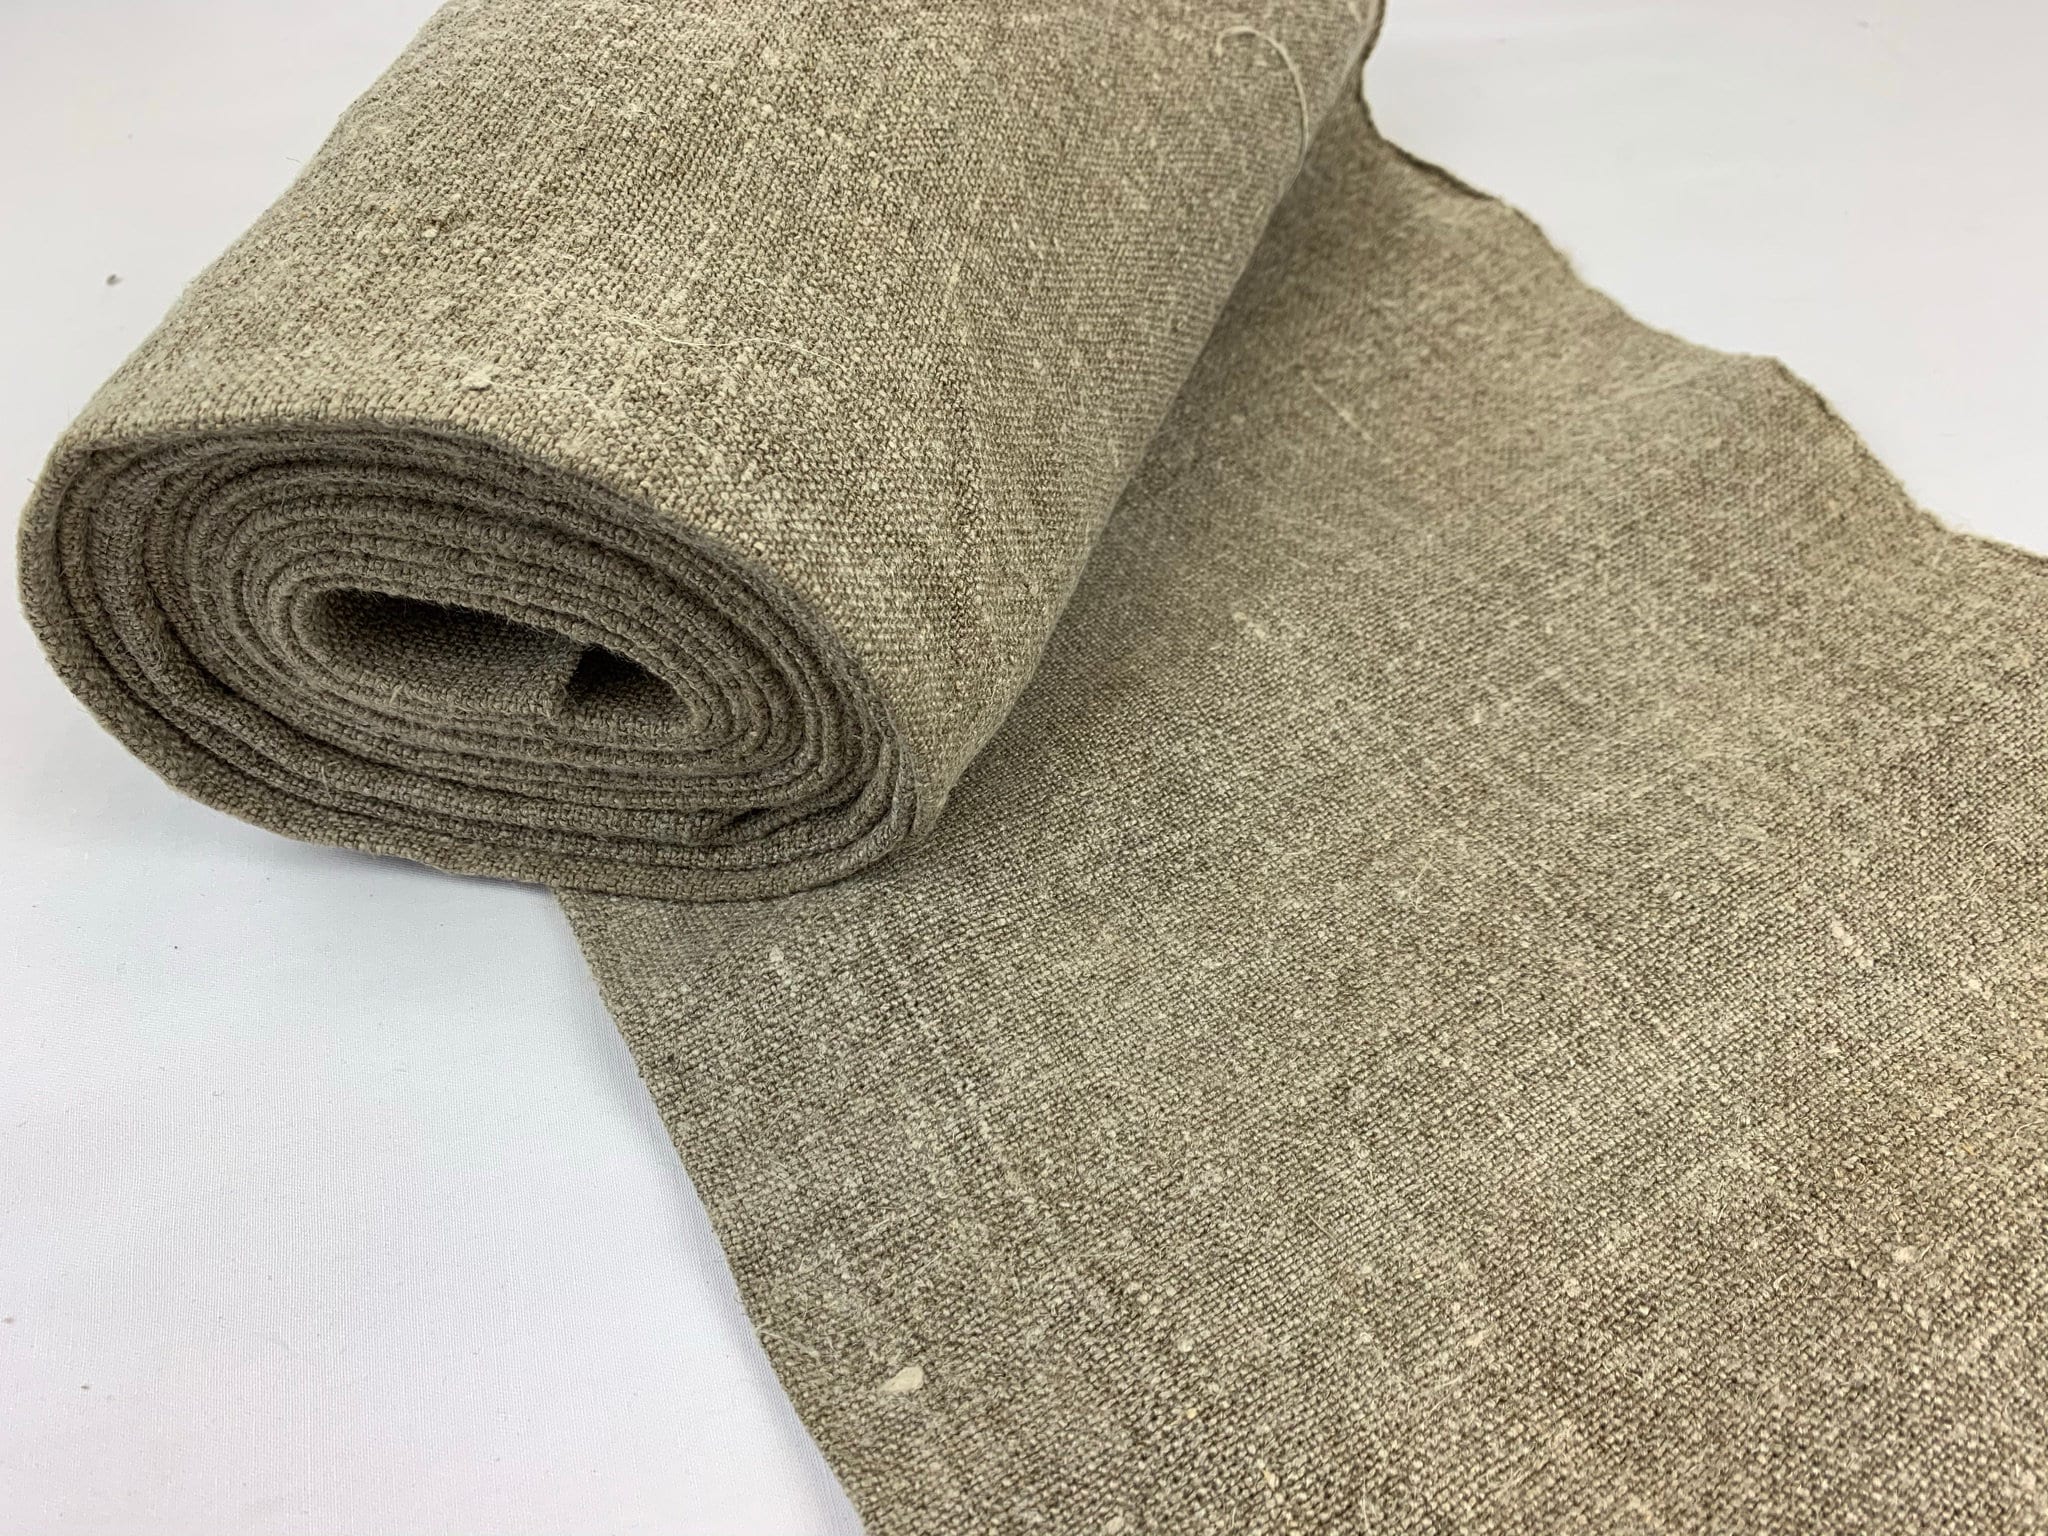 Homespun Nettle Fabric Handwoven Textile Large Bale 3.5 yards | Etsy